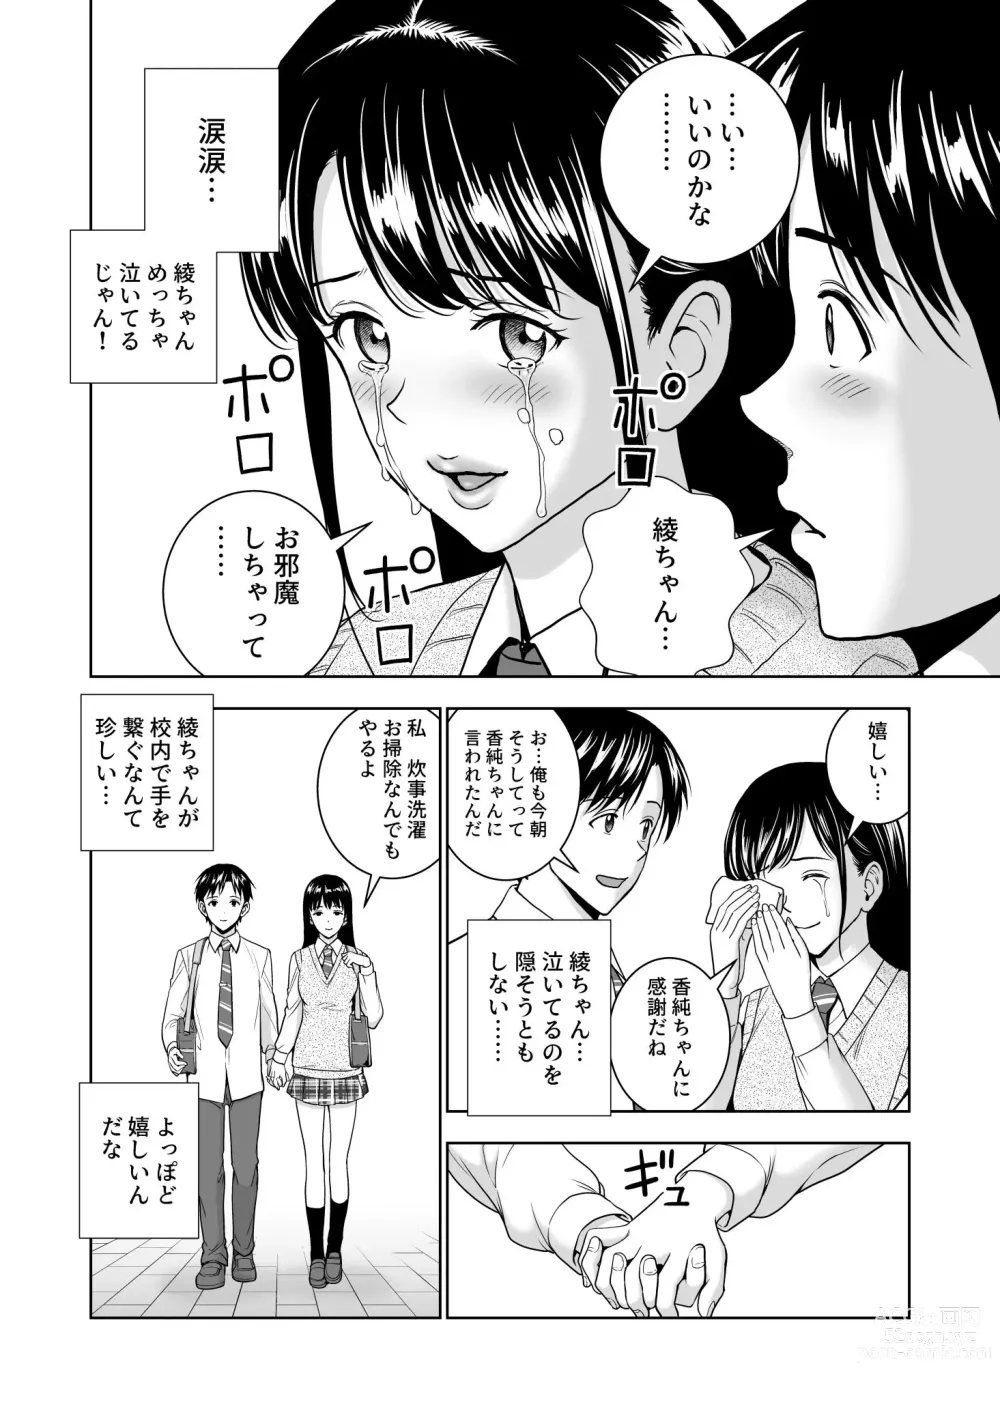 Page 87 of doujinshi Haru Kurabe 5